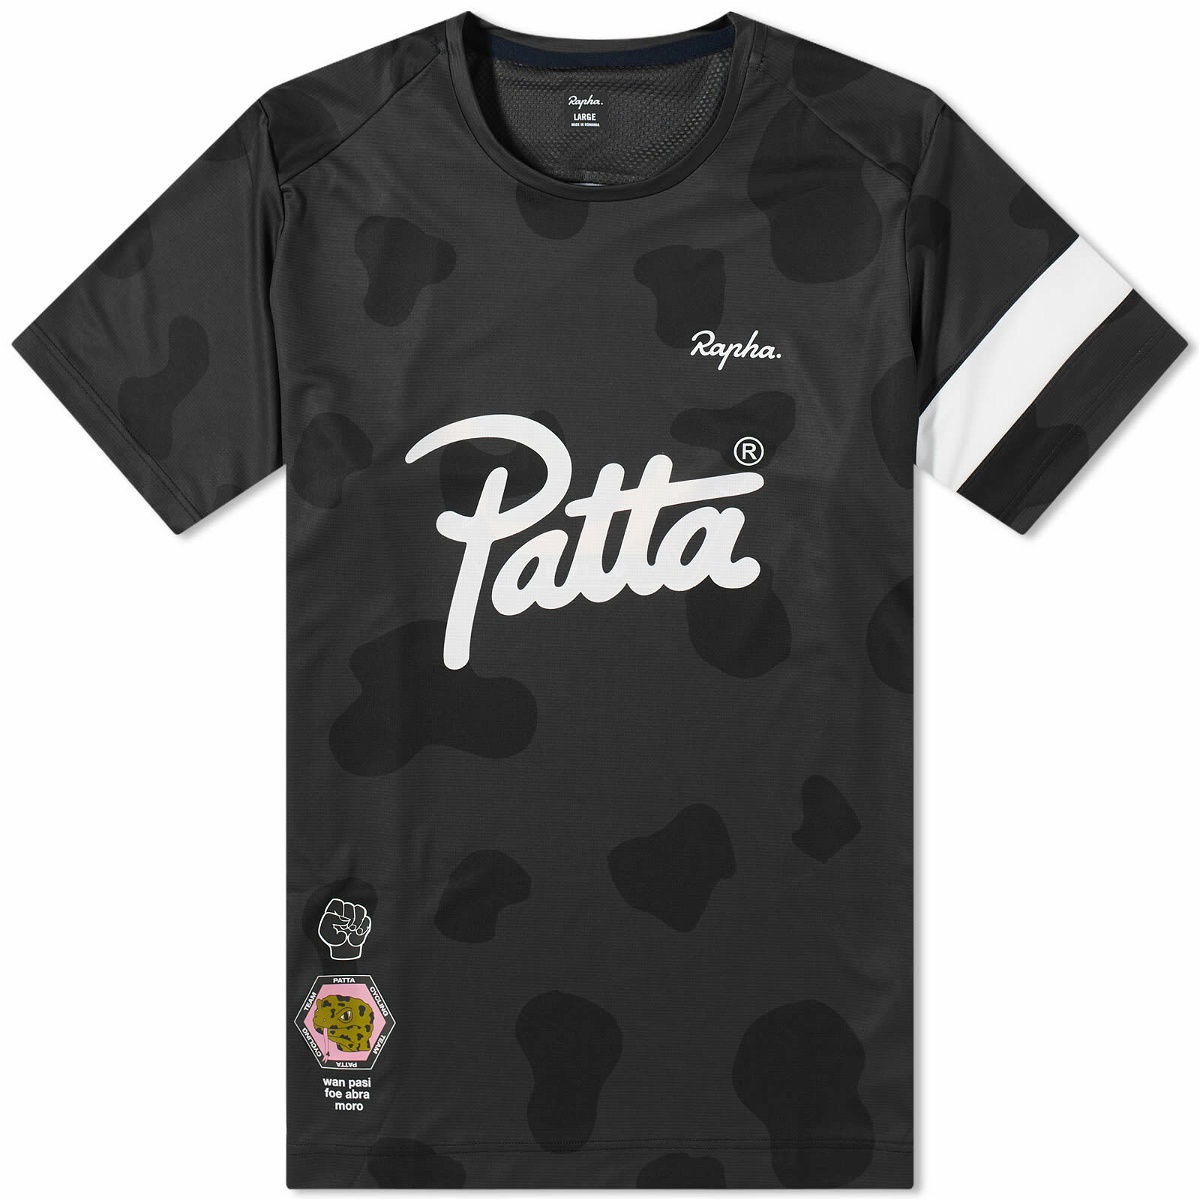 Rapha x Patta Trail Technical T-Shirt in Black